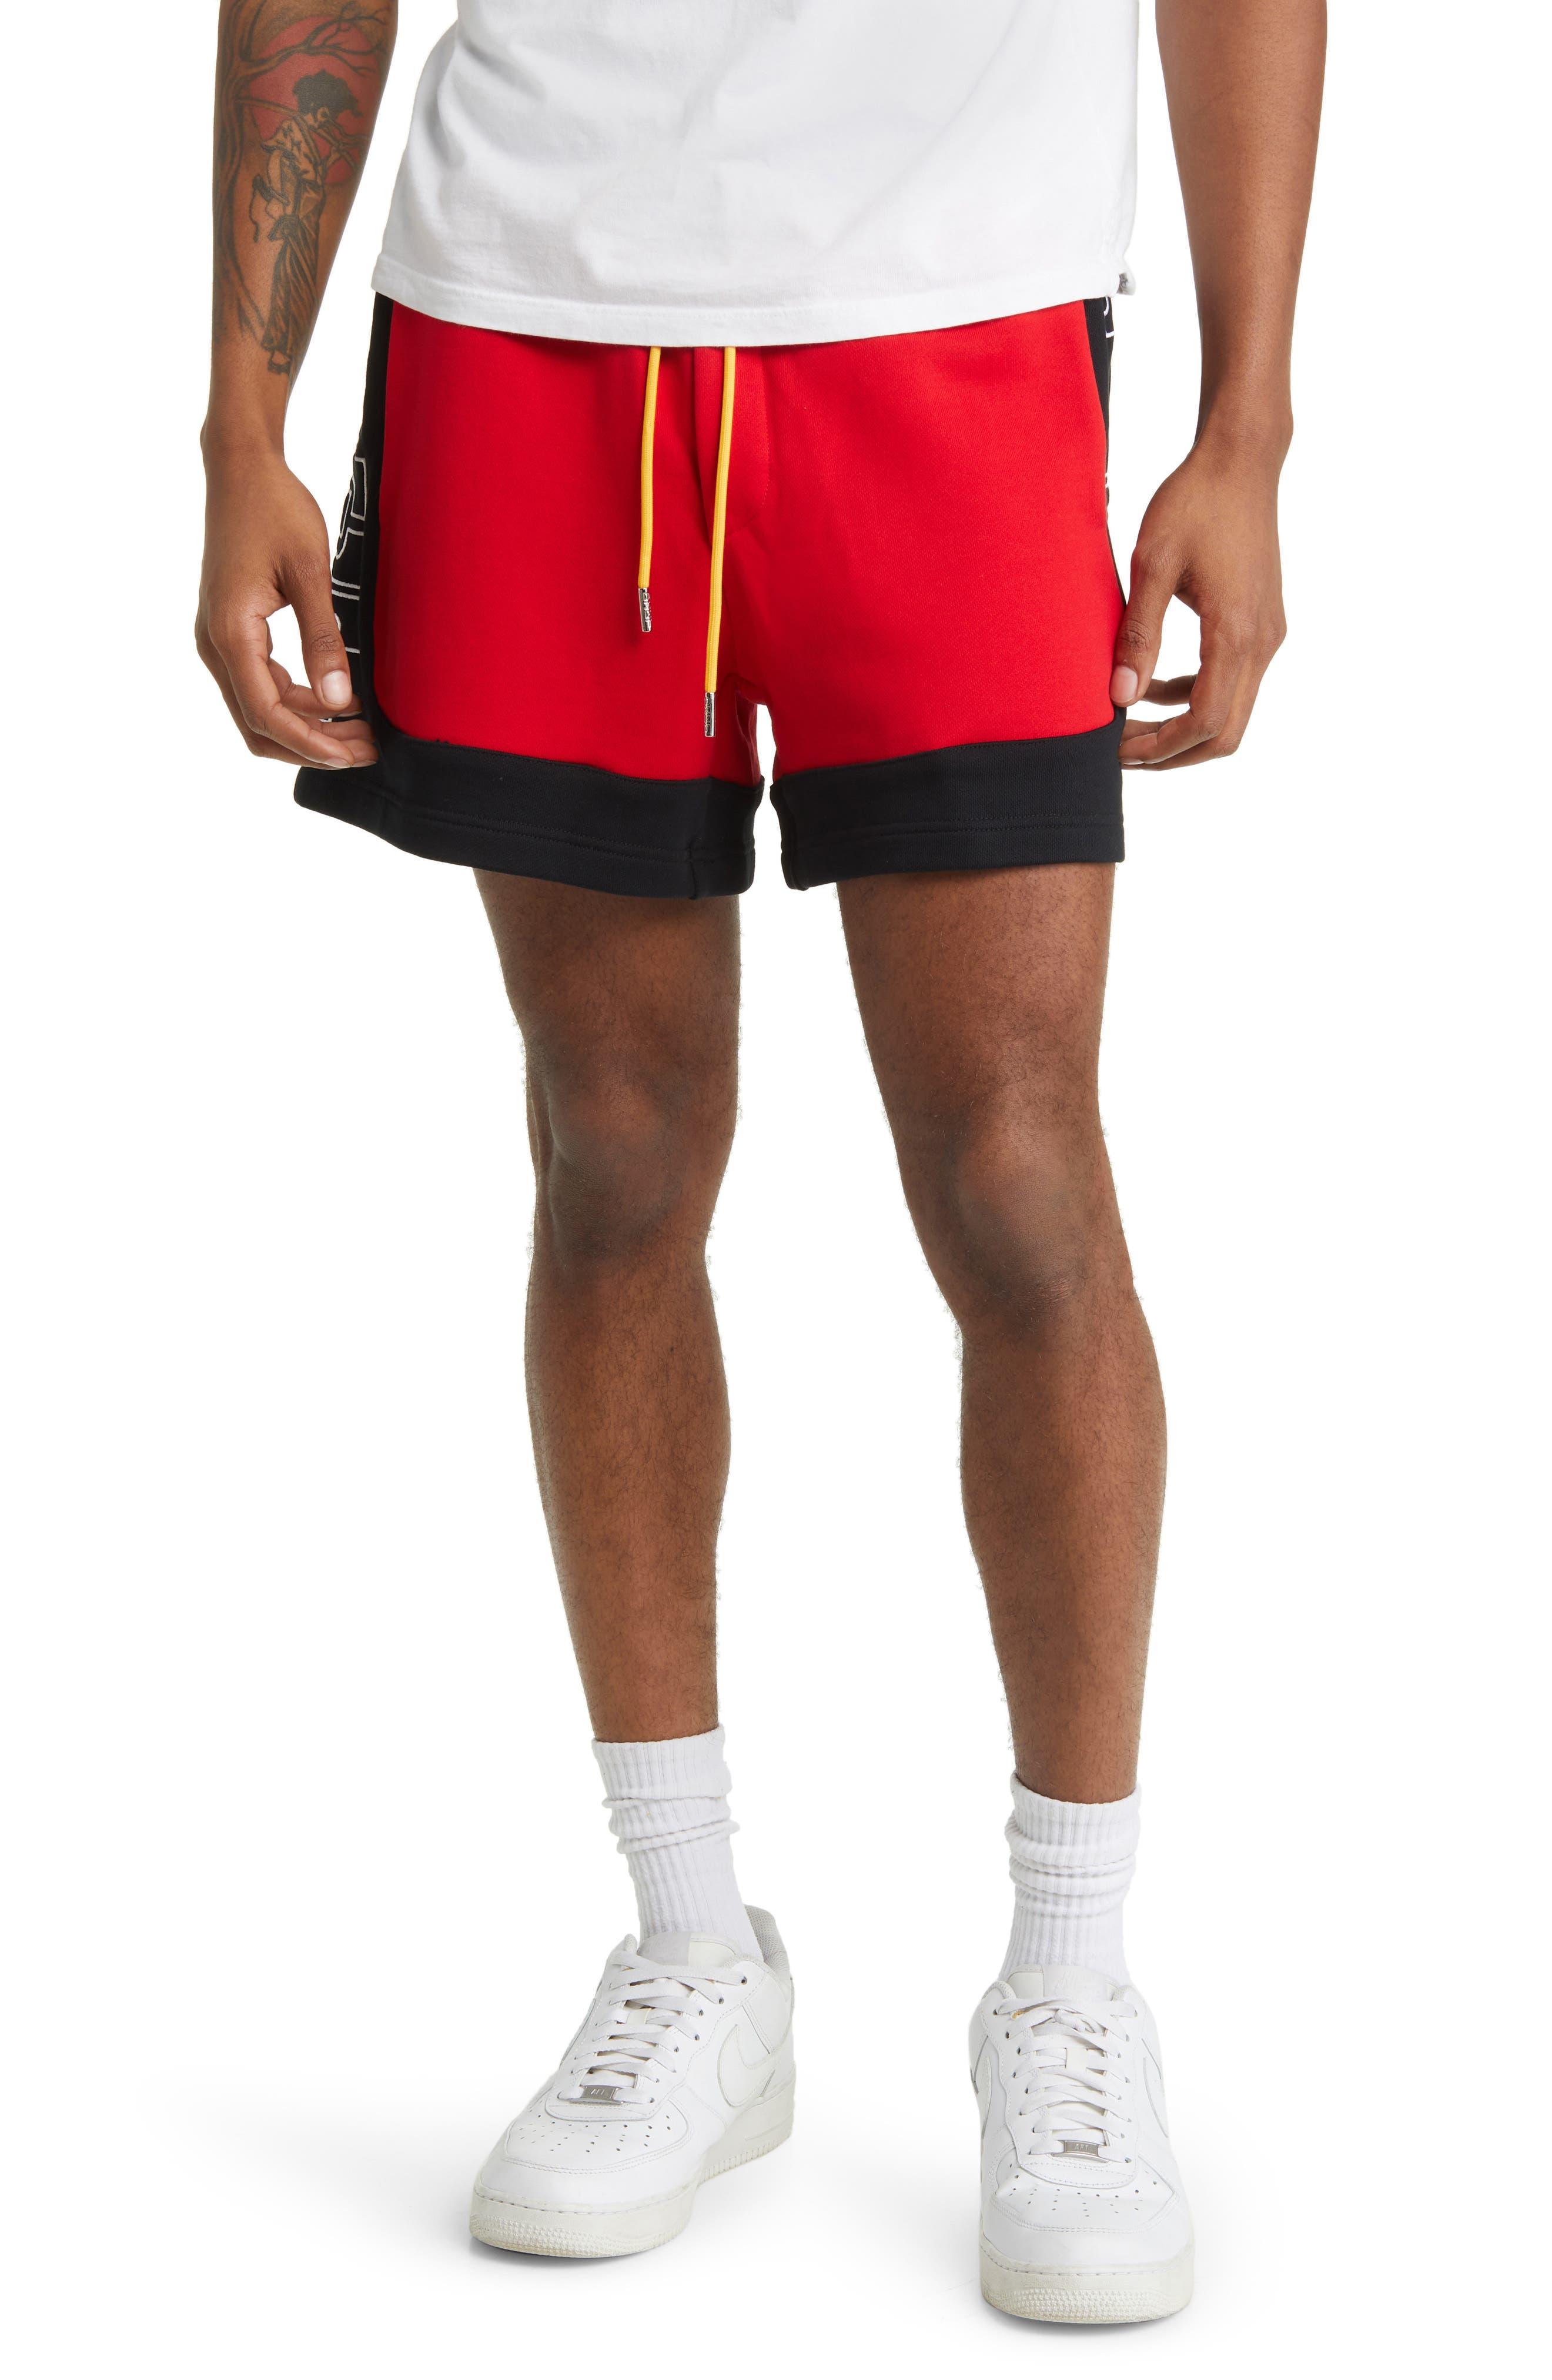 Men's Profile Gray/Red St. Louis Cardinals Team Shorts